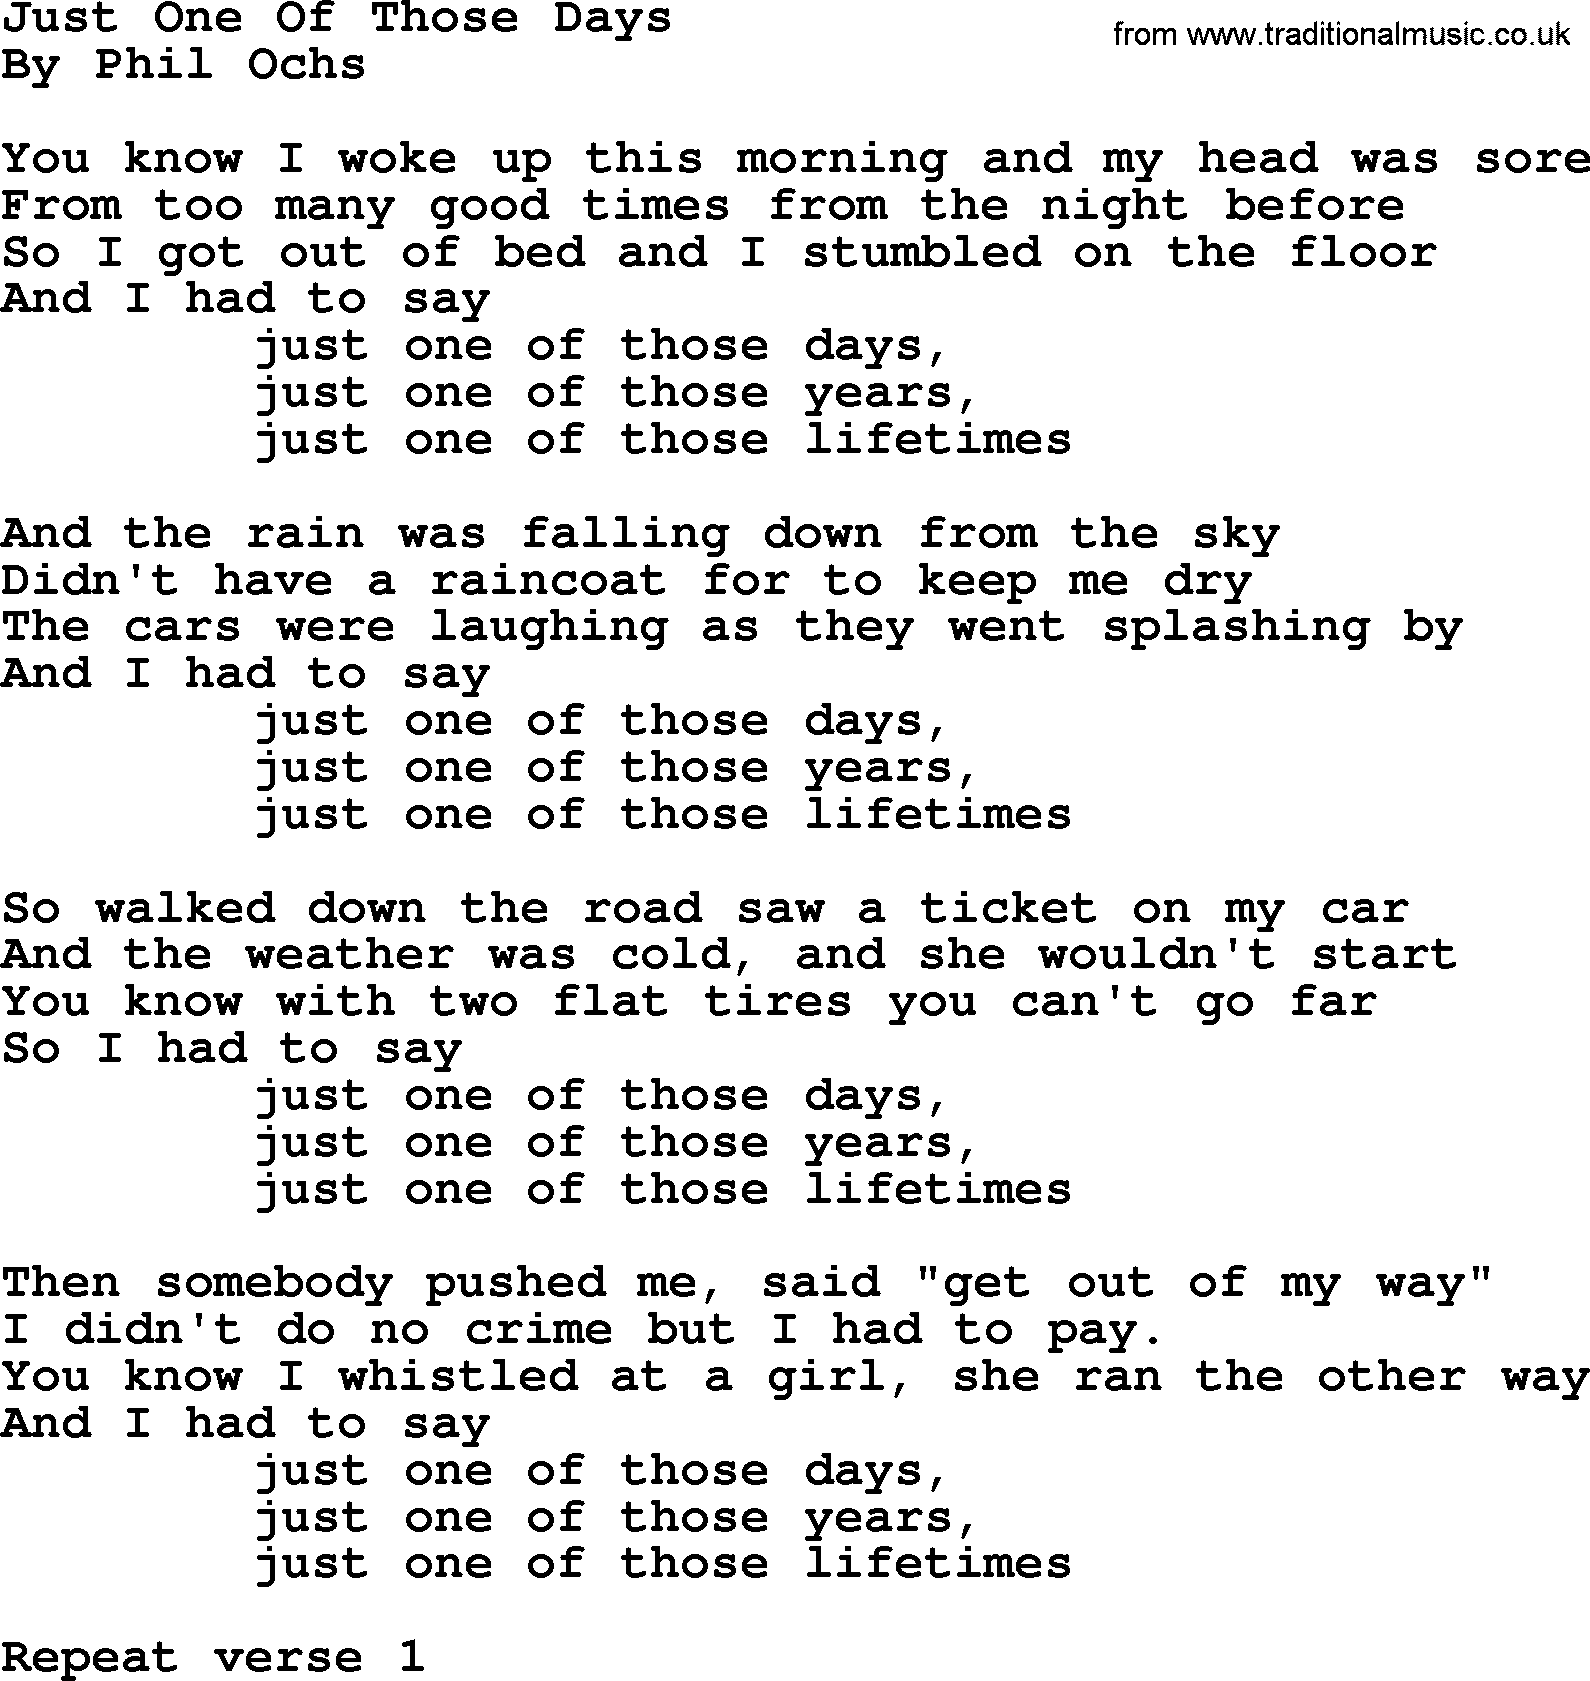 Phil Ochs song Just One Of Those Days, lyrics